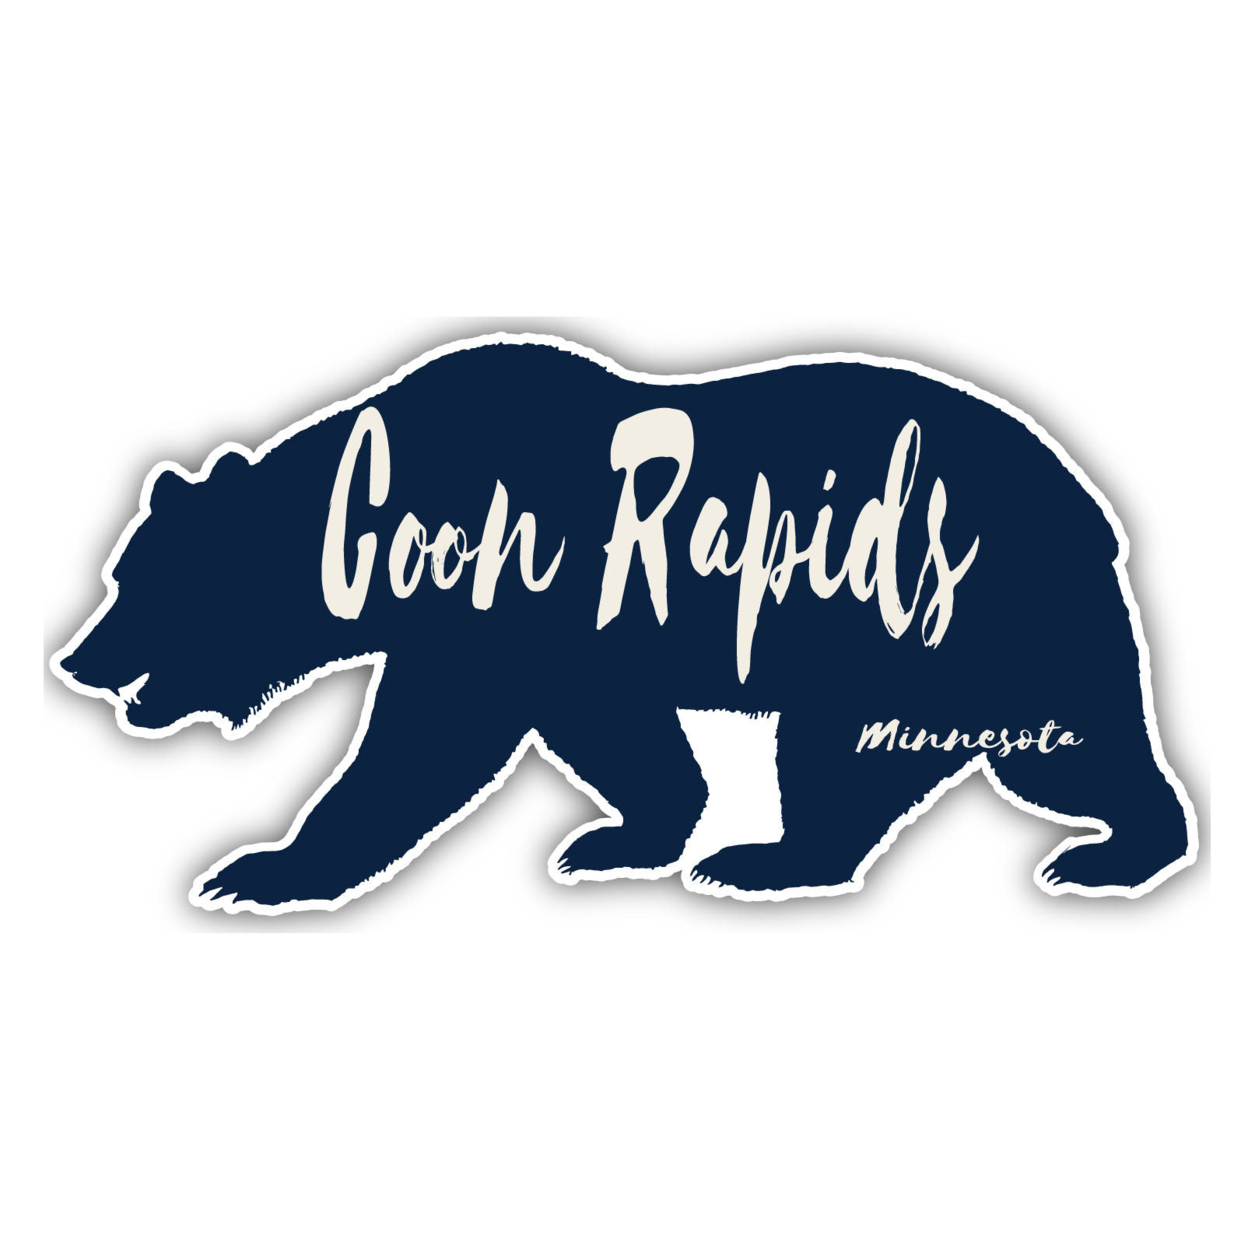 Coon Rapids Minnesota Souvenir Decorative Stickers (Choose Theme And Size) - Single Unit, 8-Inch, Camp Life